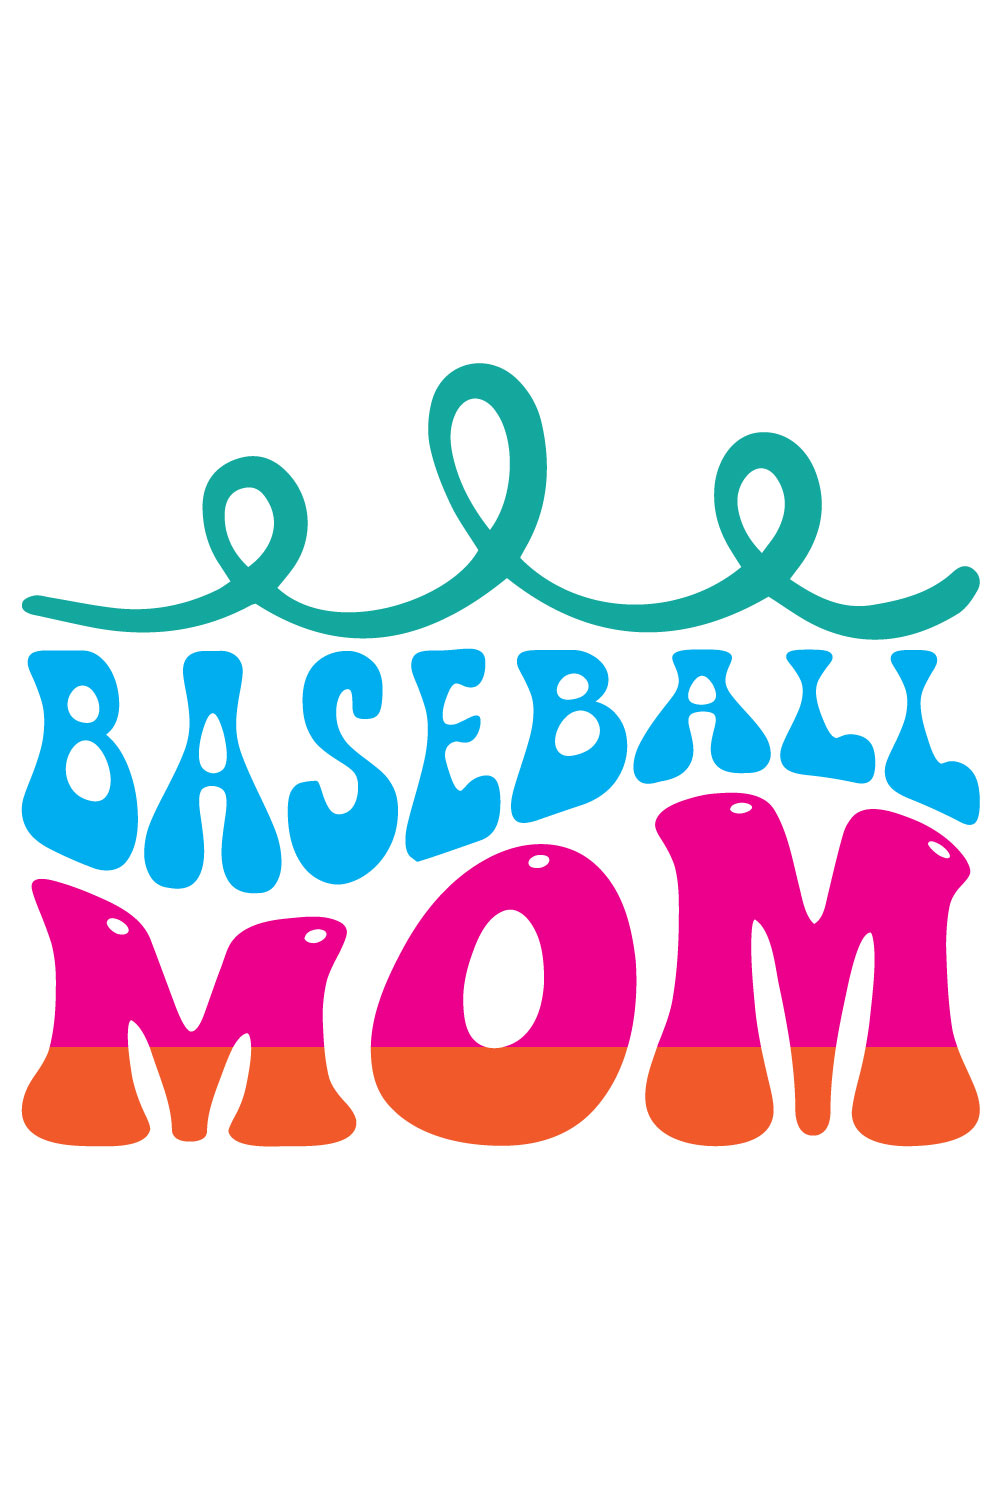 Baseball mom t shirt designs pinterest preview image.